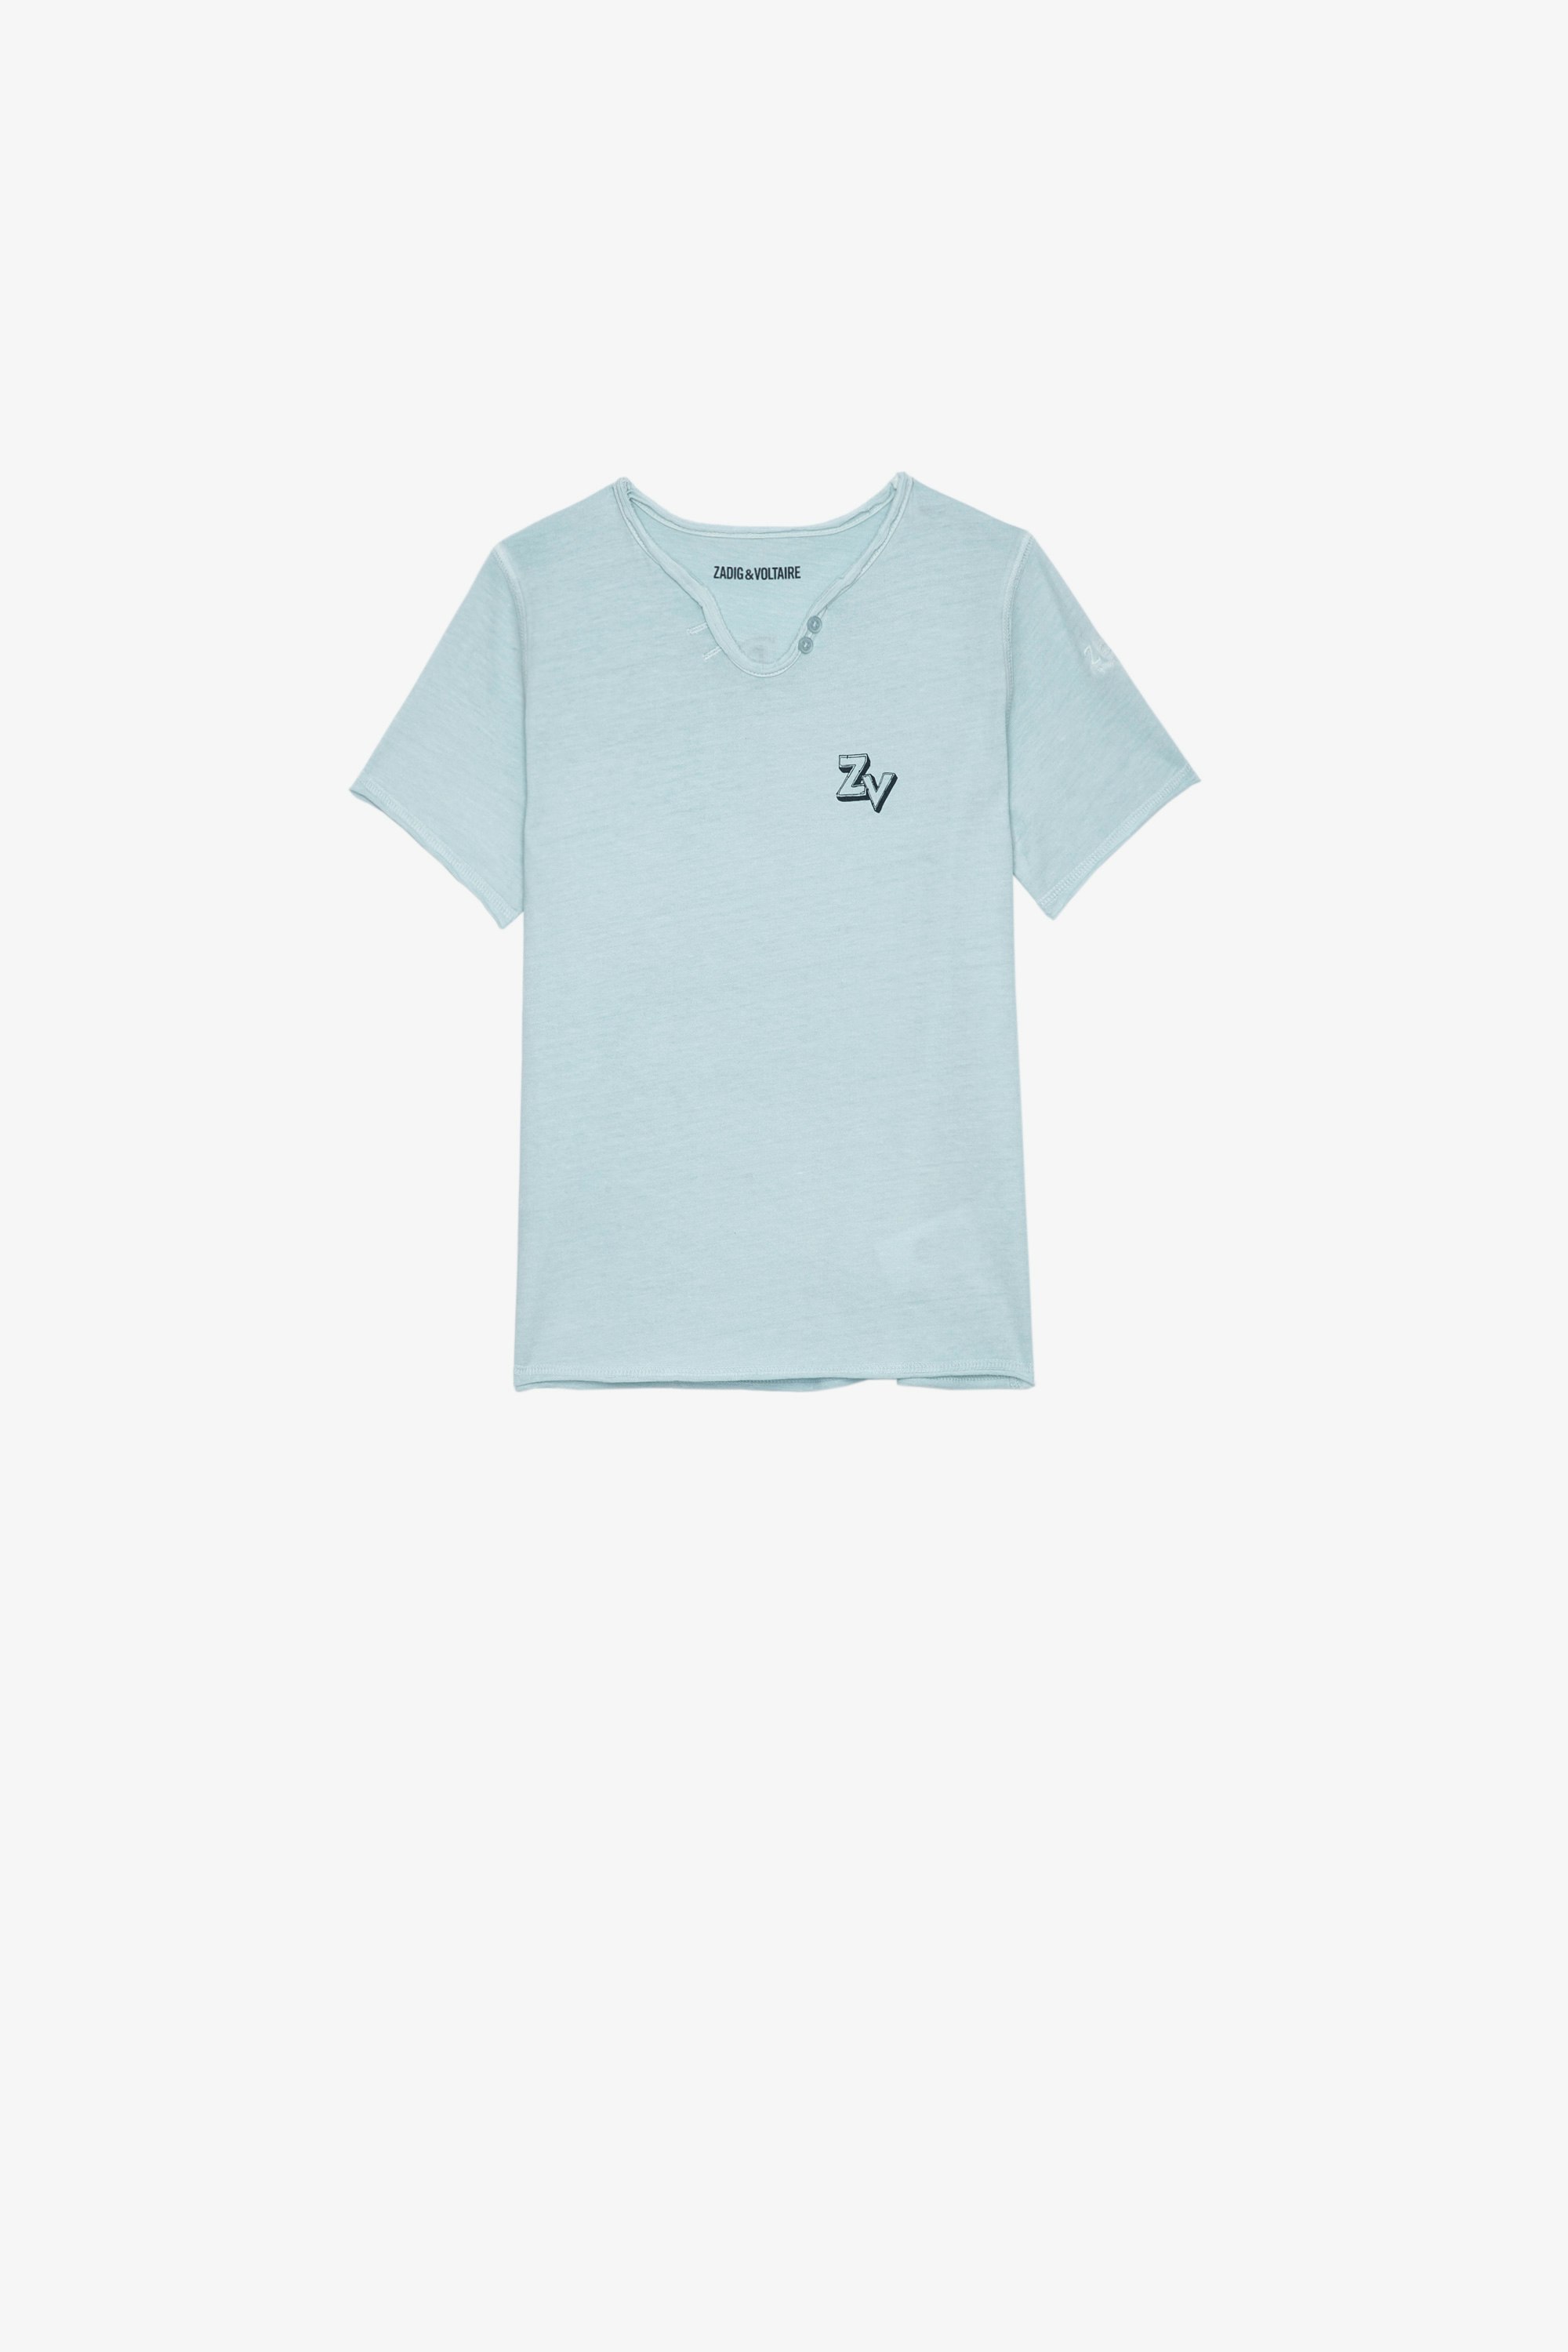 Camiseta Boxer Infantil Camiseta azul claro de punto de algodón de manga corta infantil con estampado de guitarra, firma ZV y bordados